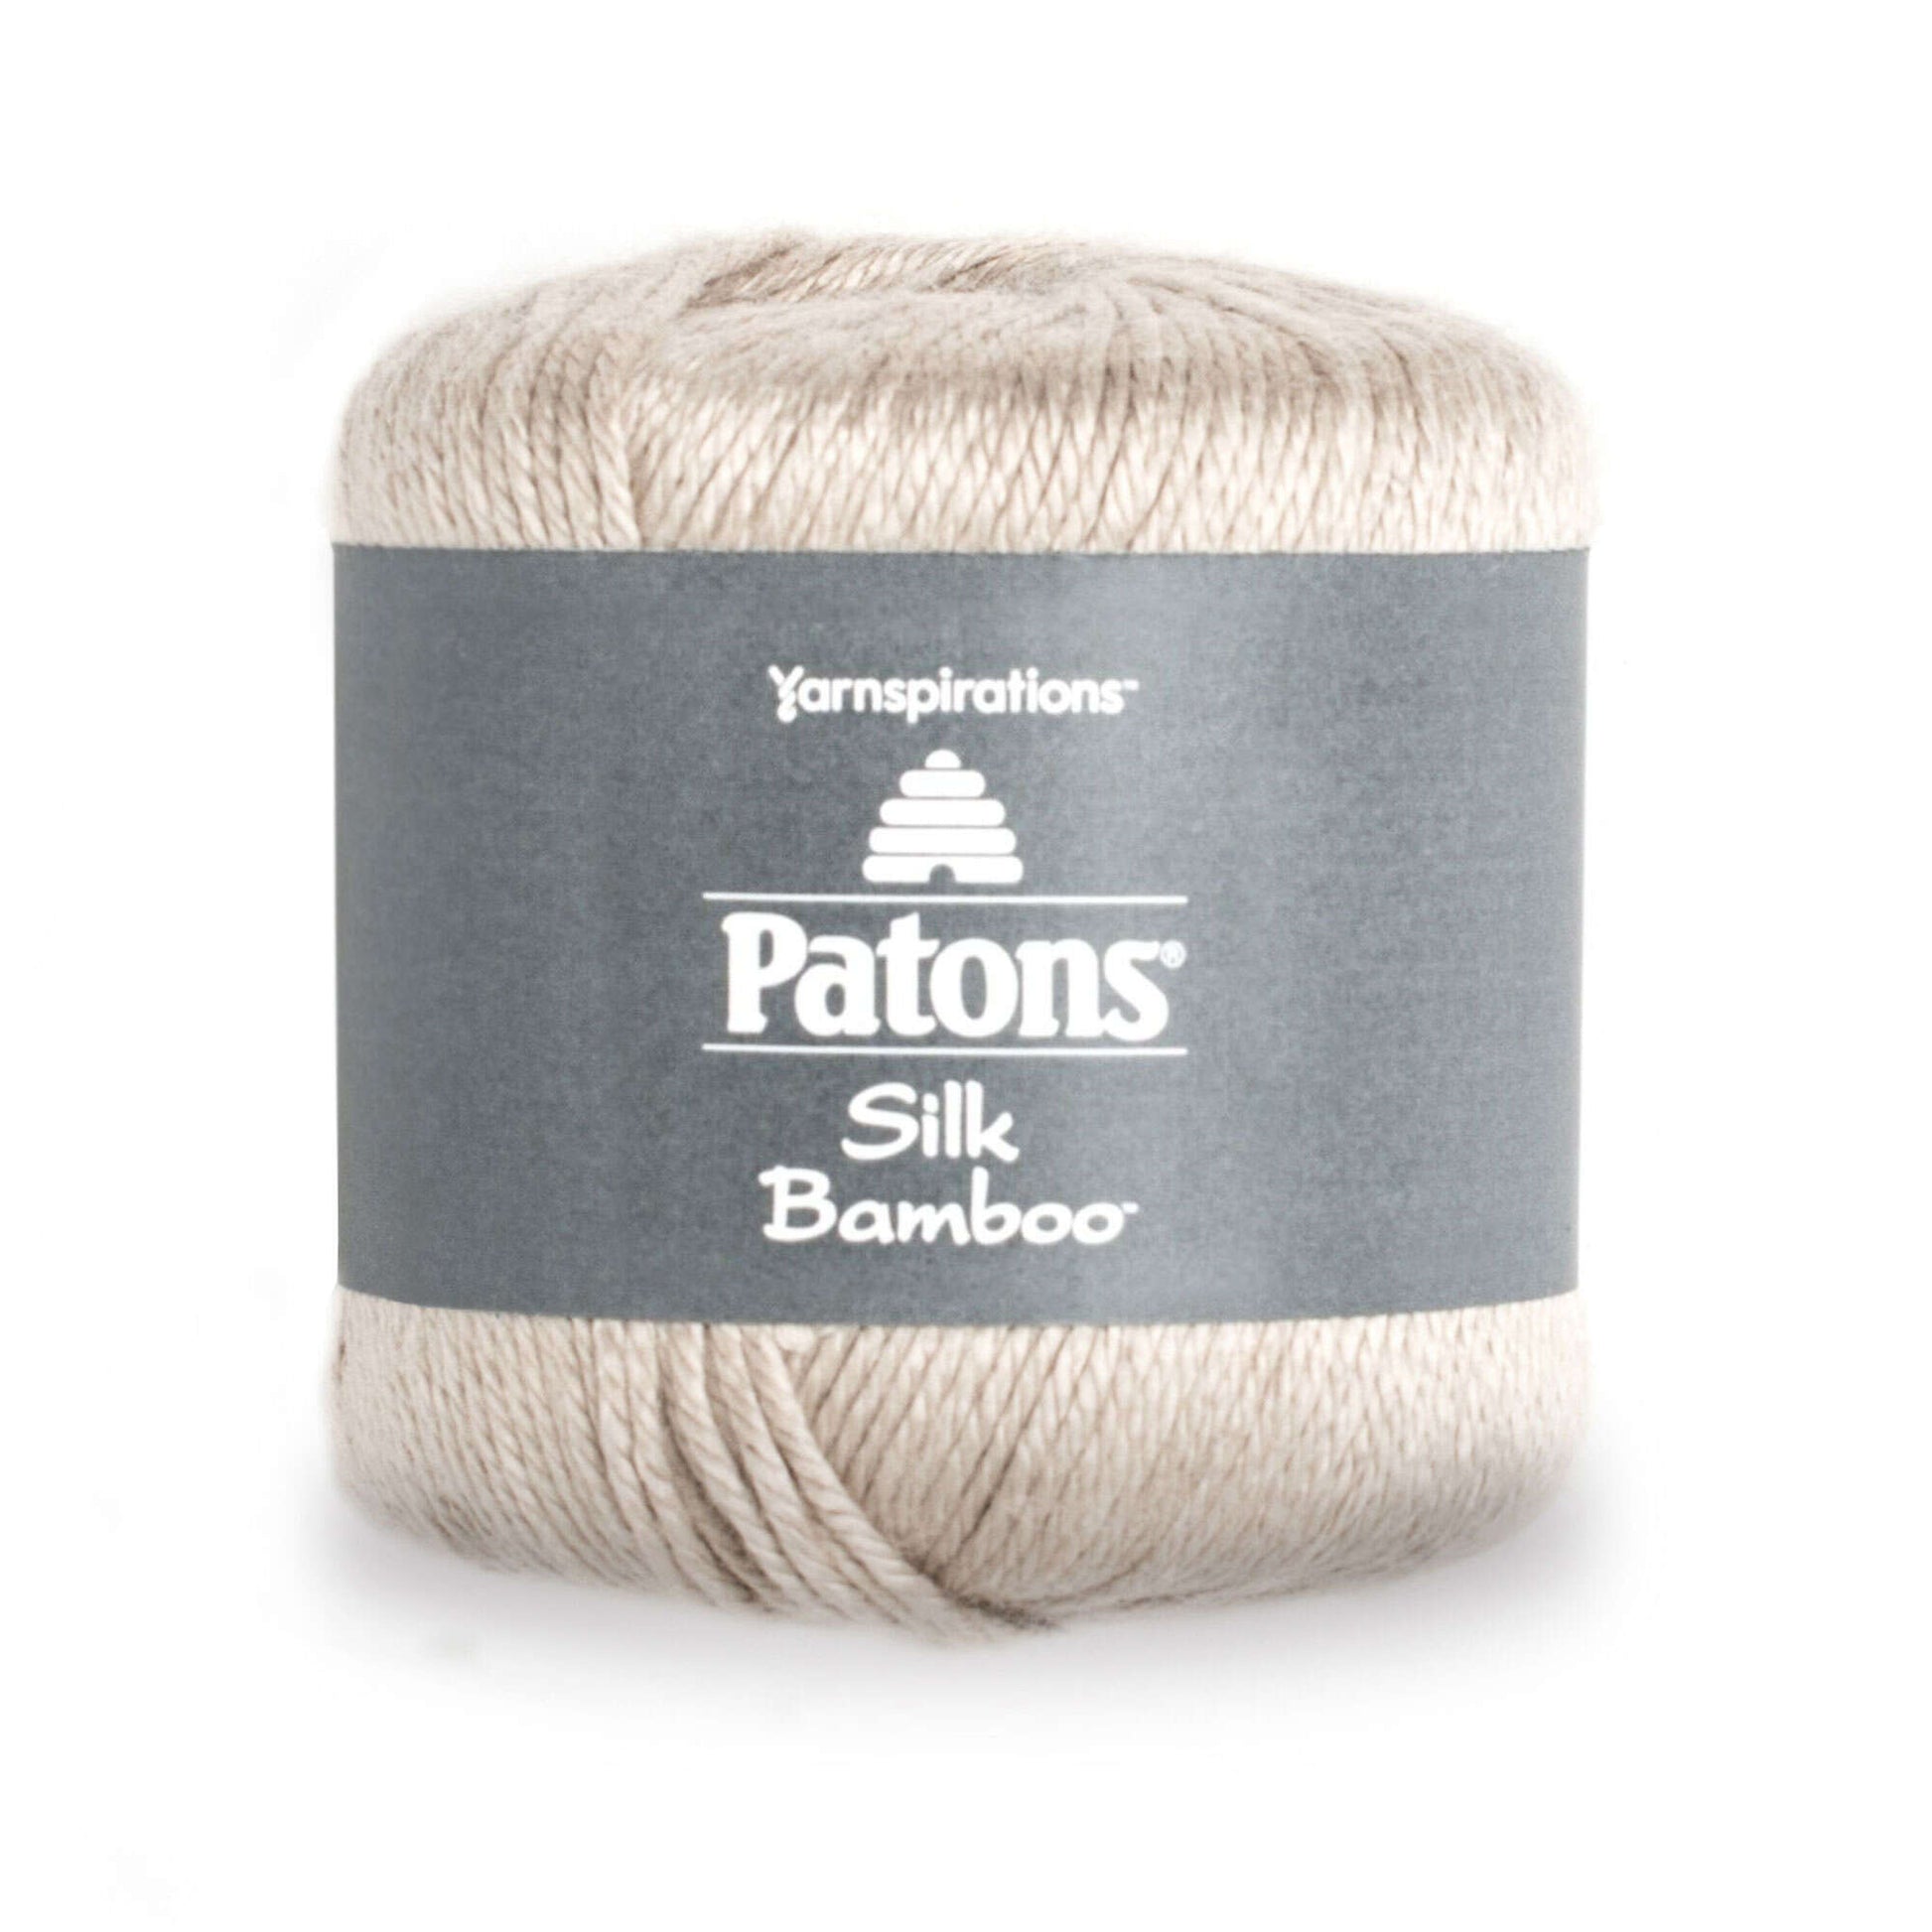 Patons Silk Bamboo Yarn - Discontinued Shades Almond